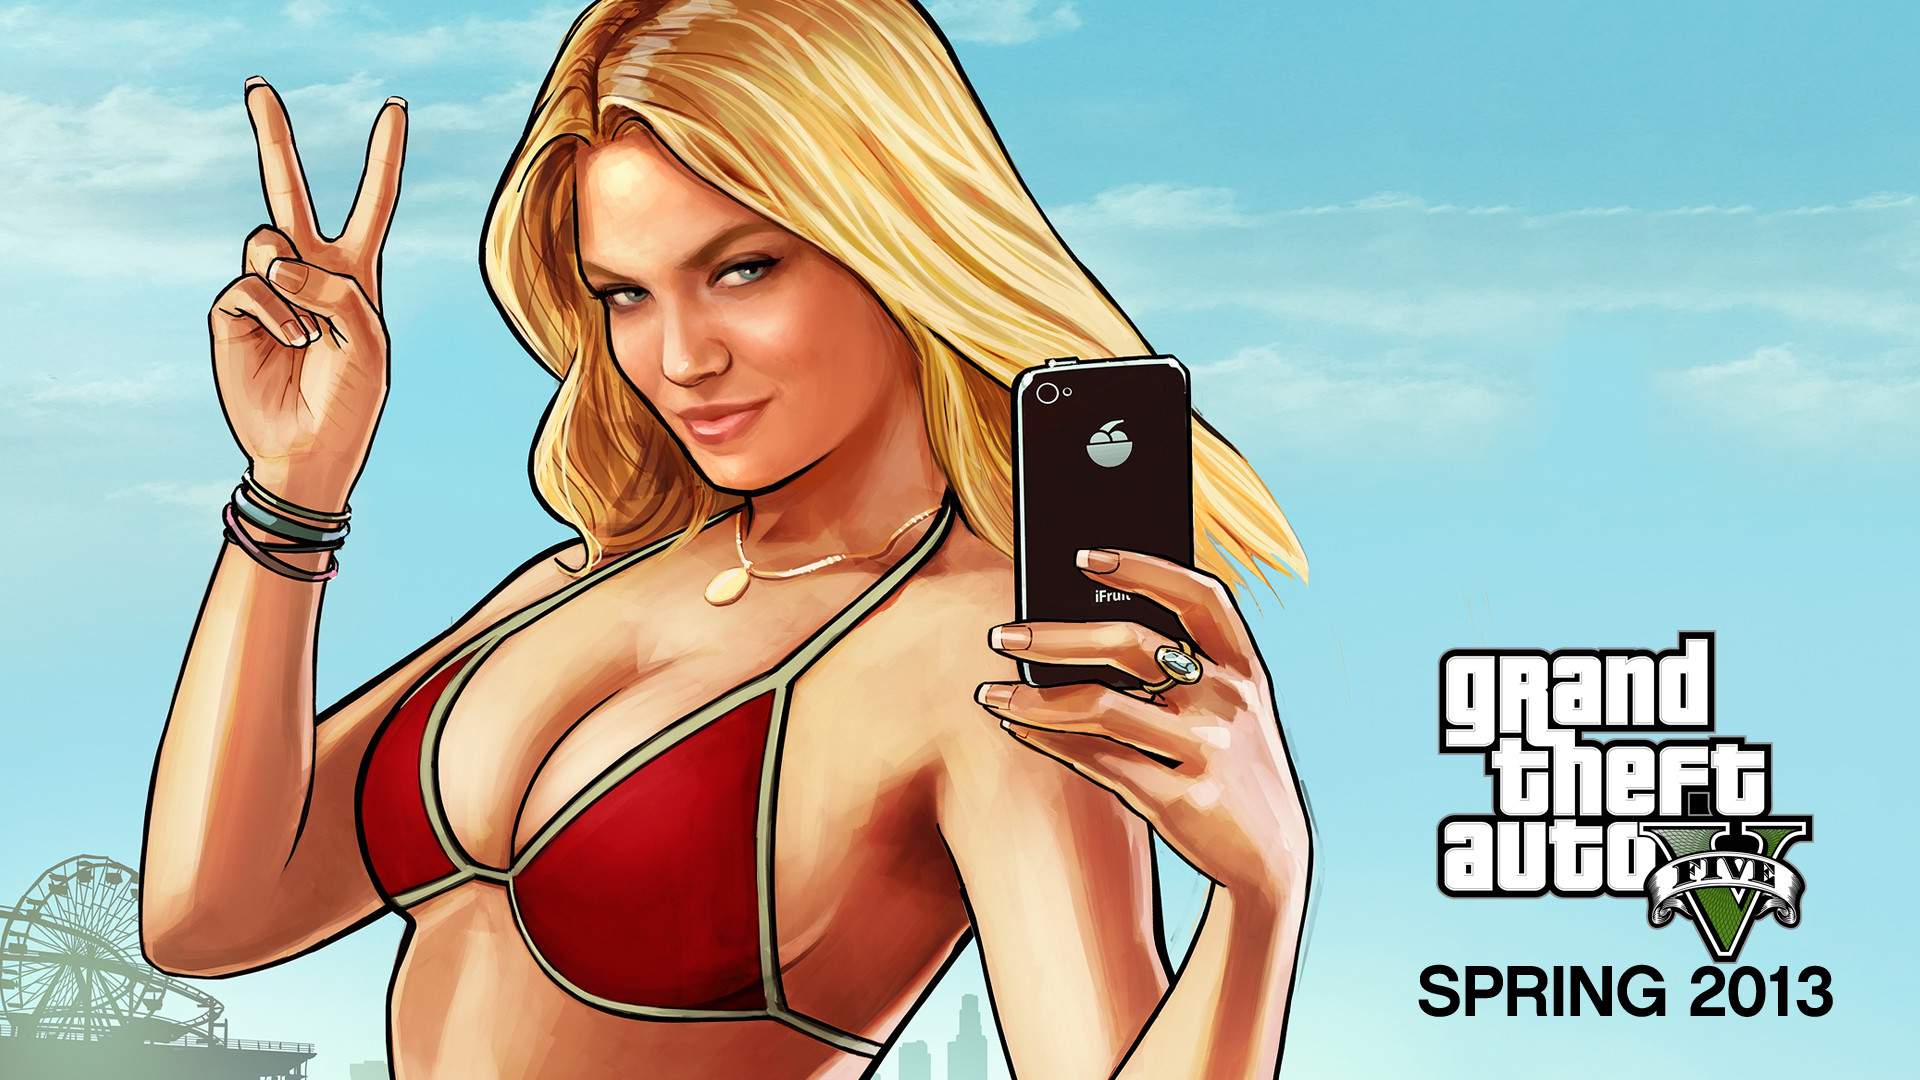 Grand Theft Auto GTA 5 Girl Character Wallpaper HD Wallpaper Grand Theft Auto GTsadadsaA 5